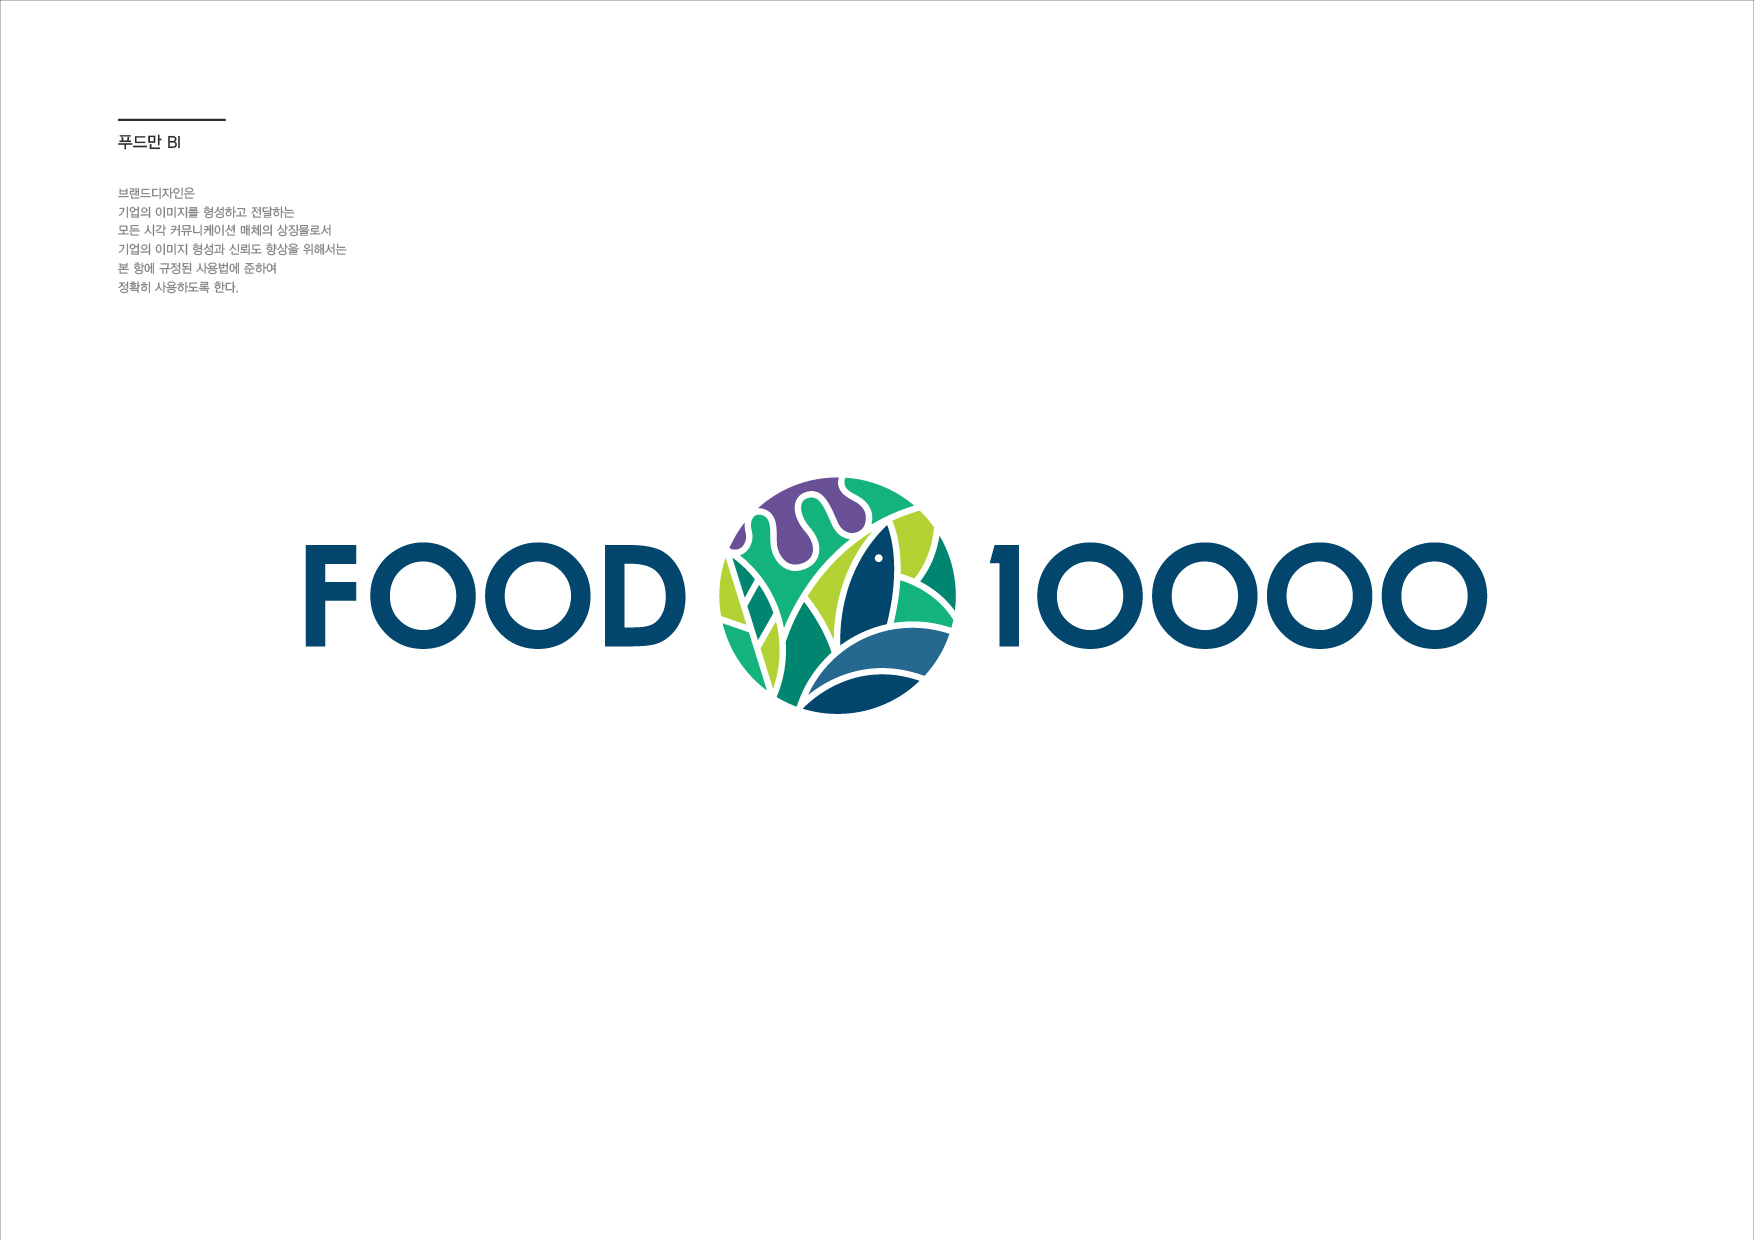 food10000 logo.jpg파일